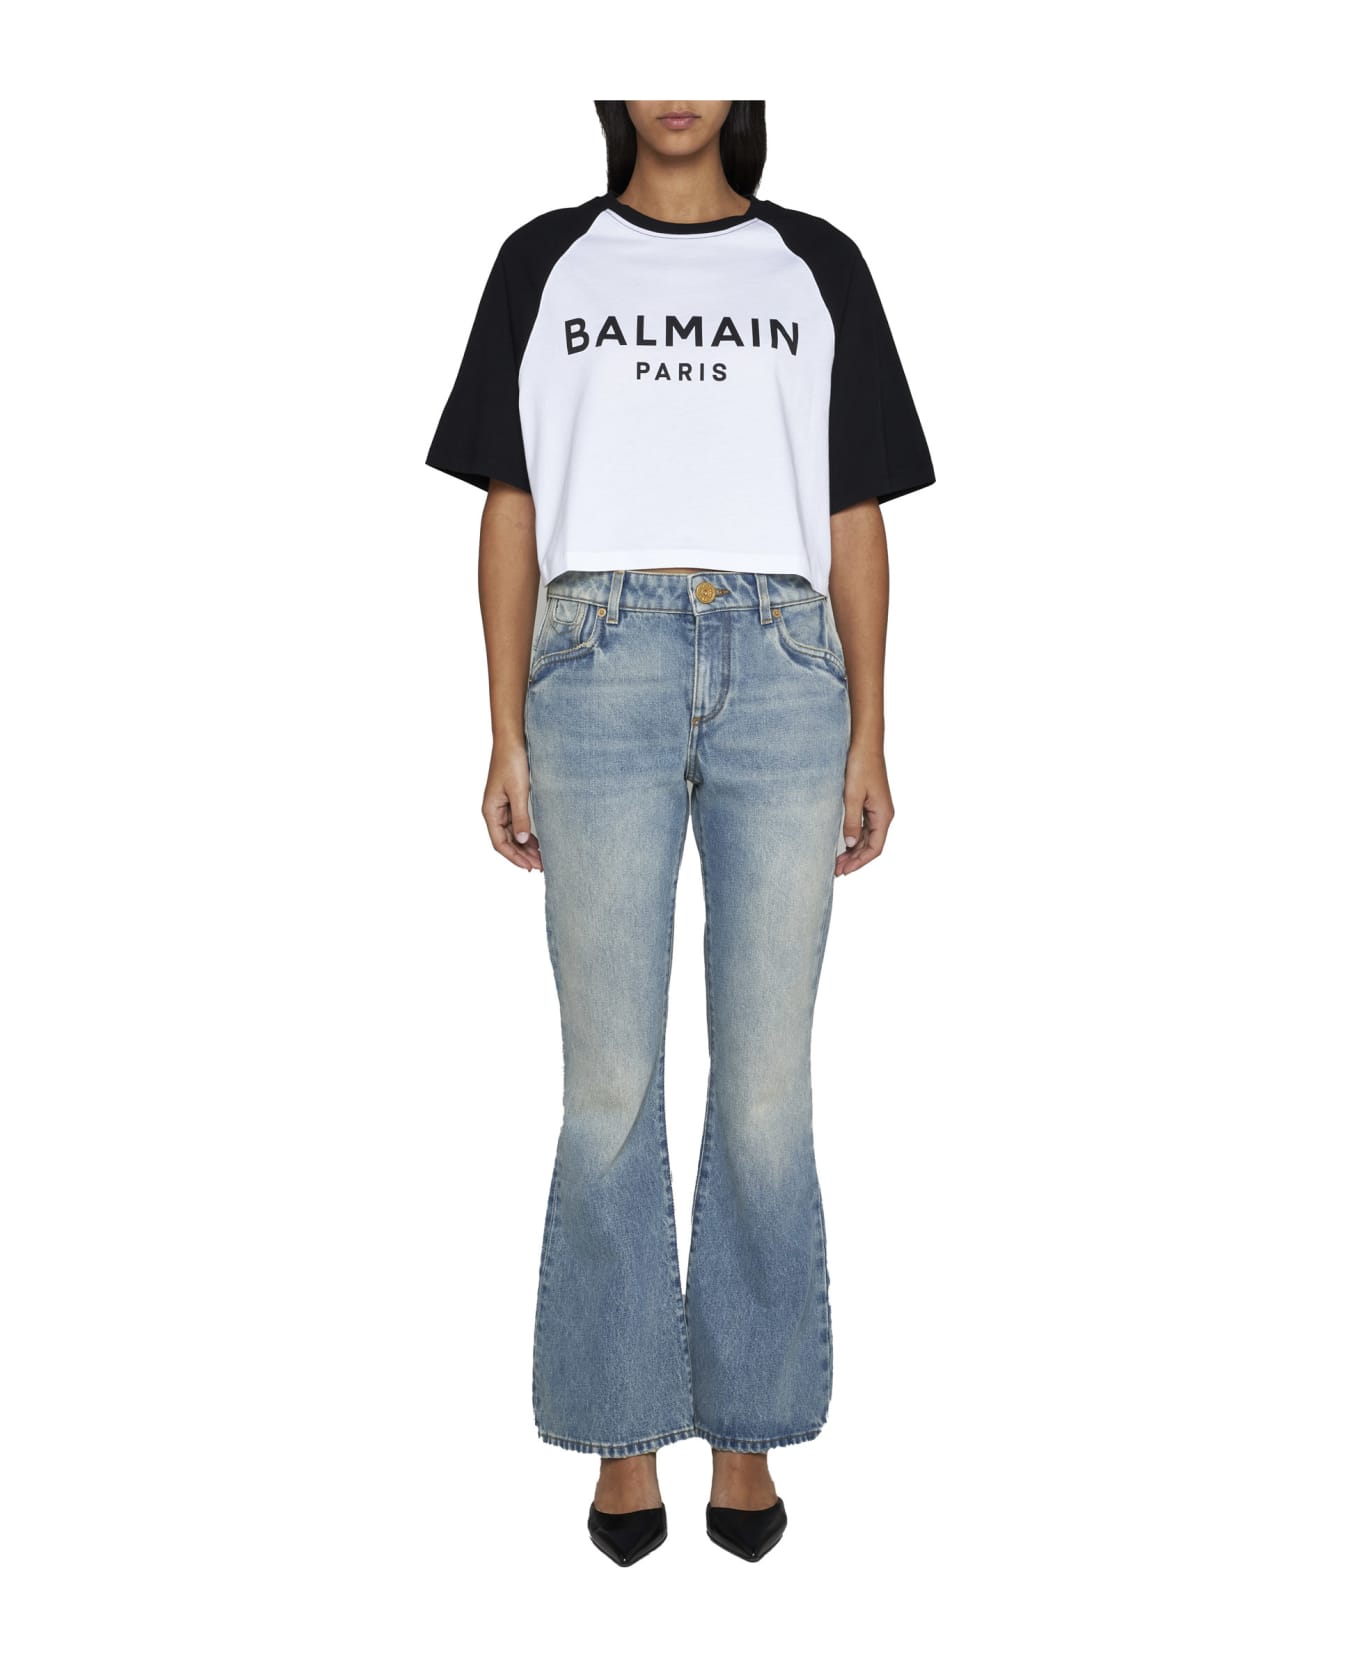 Balmain Printed Raglan Cropped T-shirt - Blanc/noir